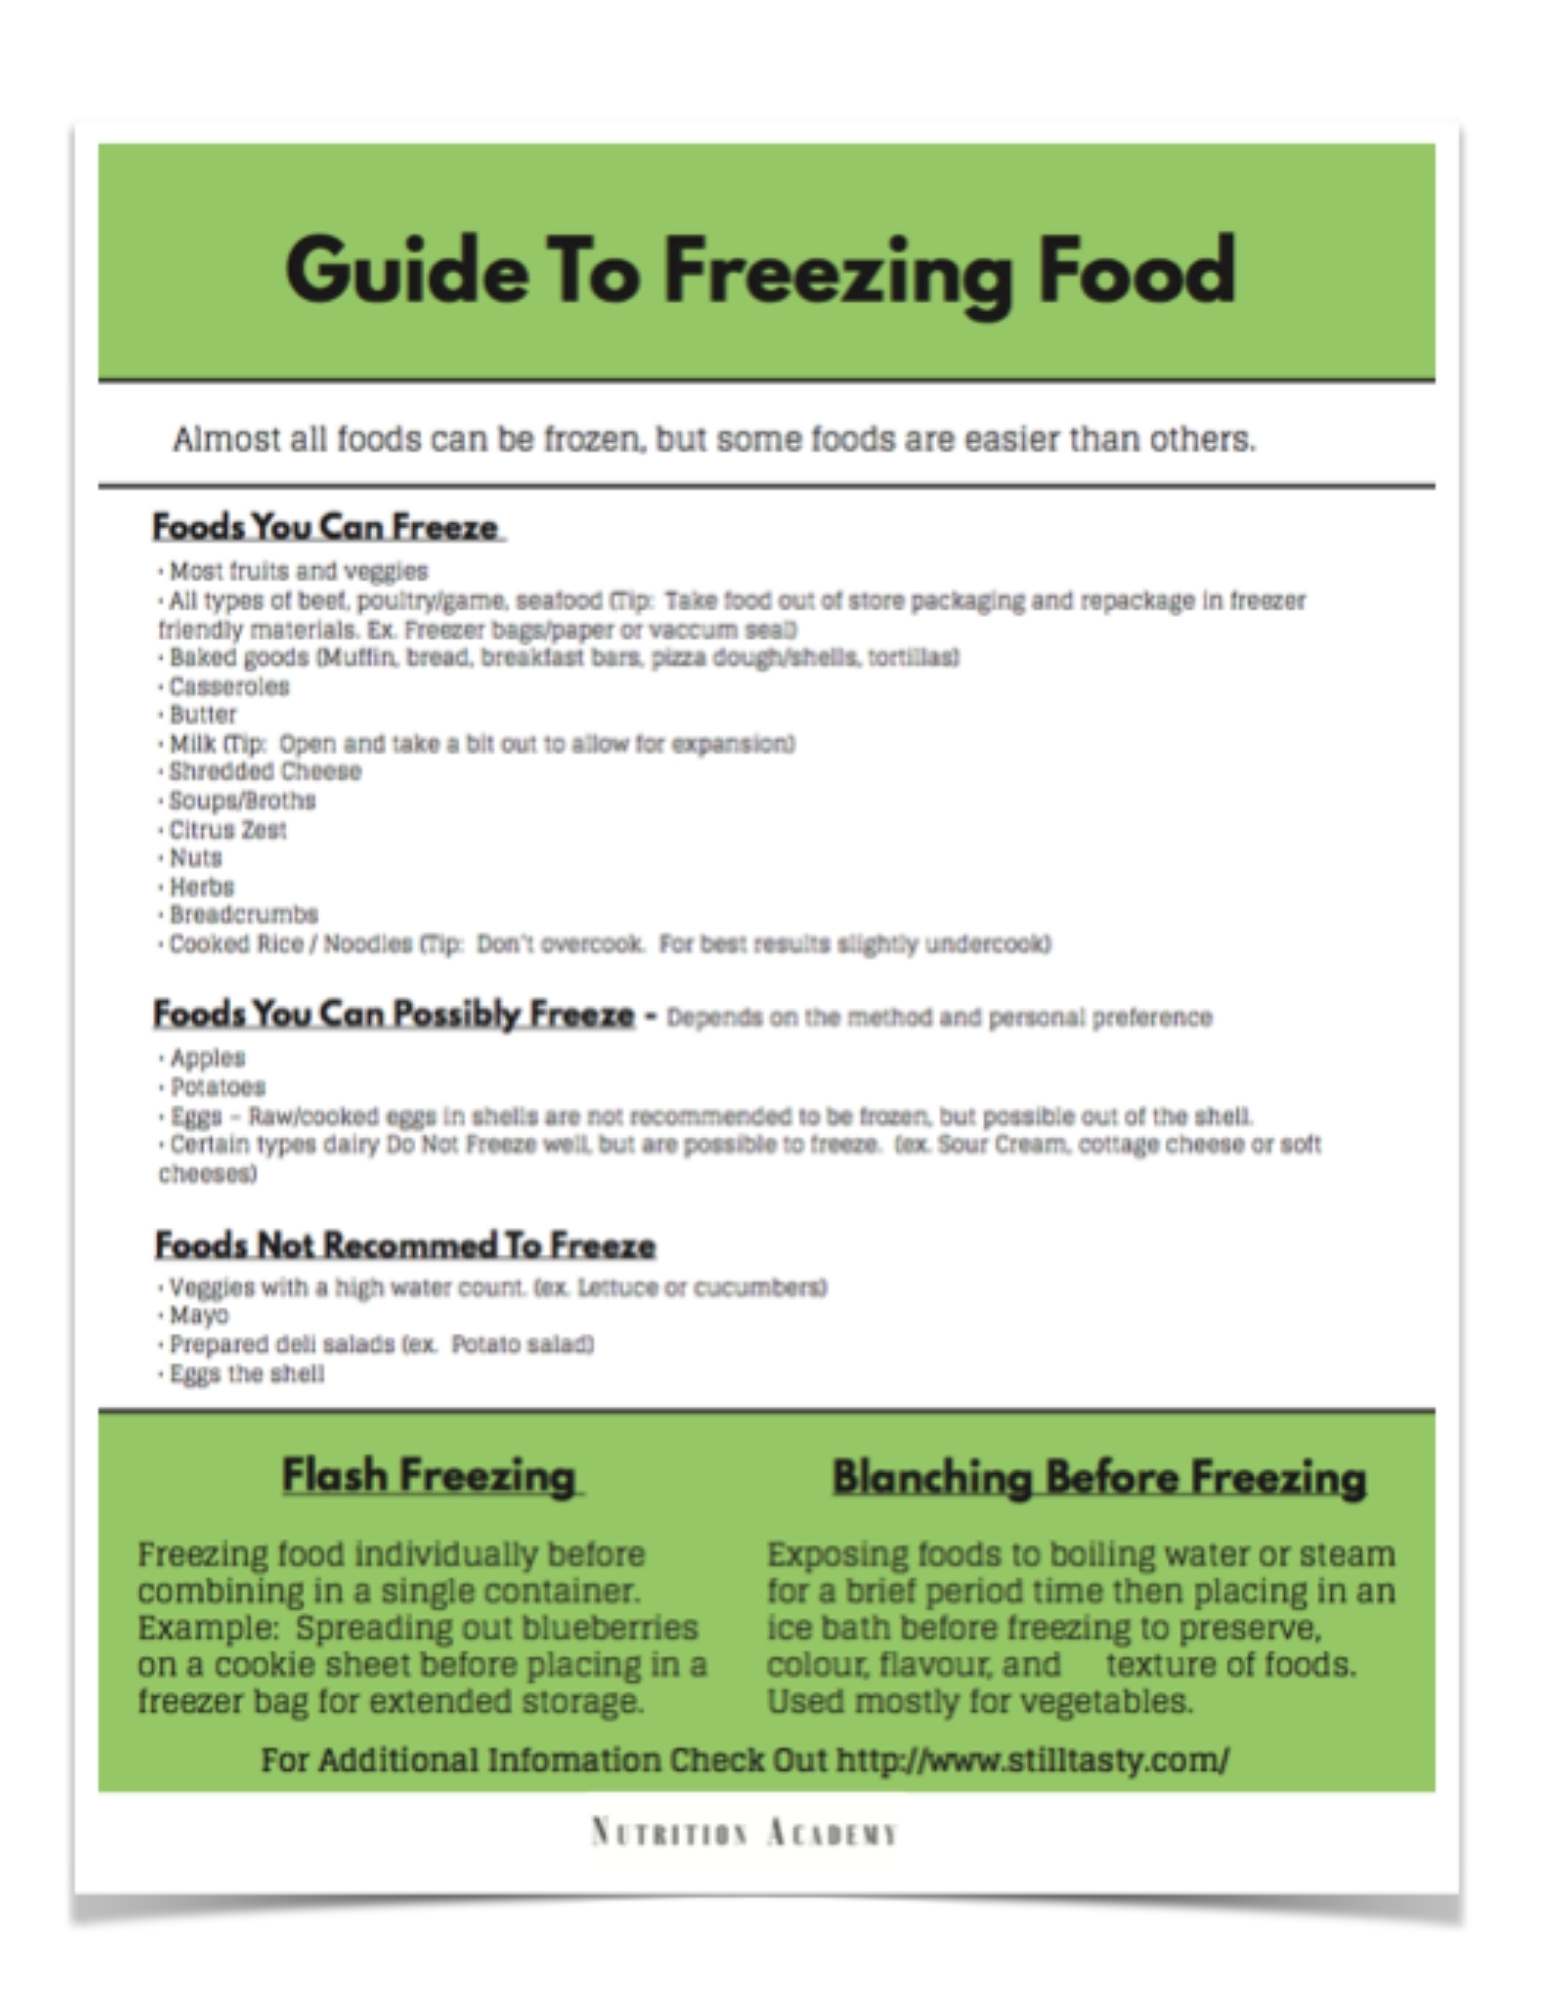 How to freeze food